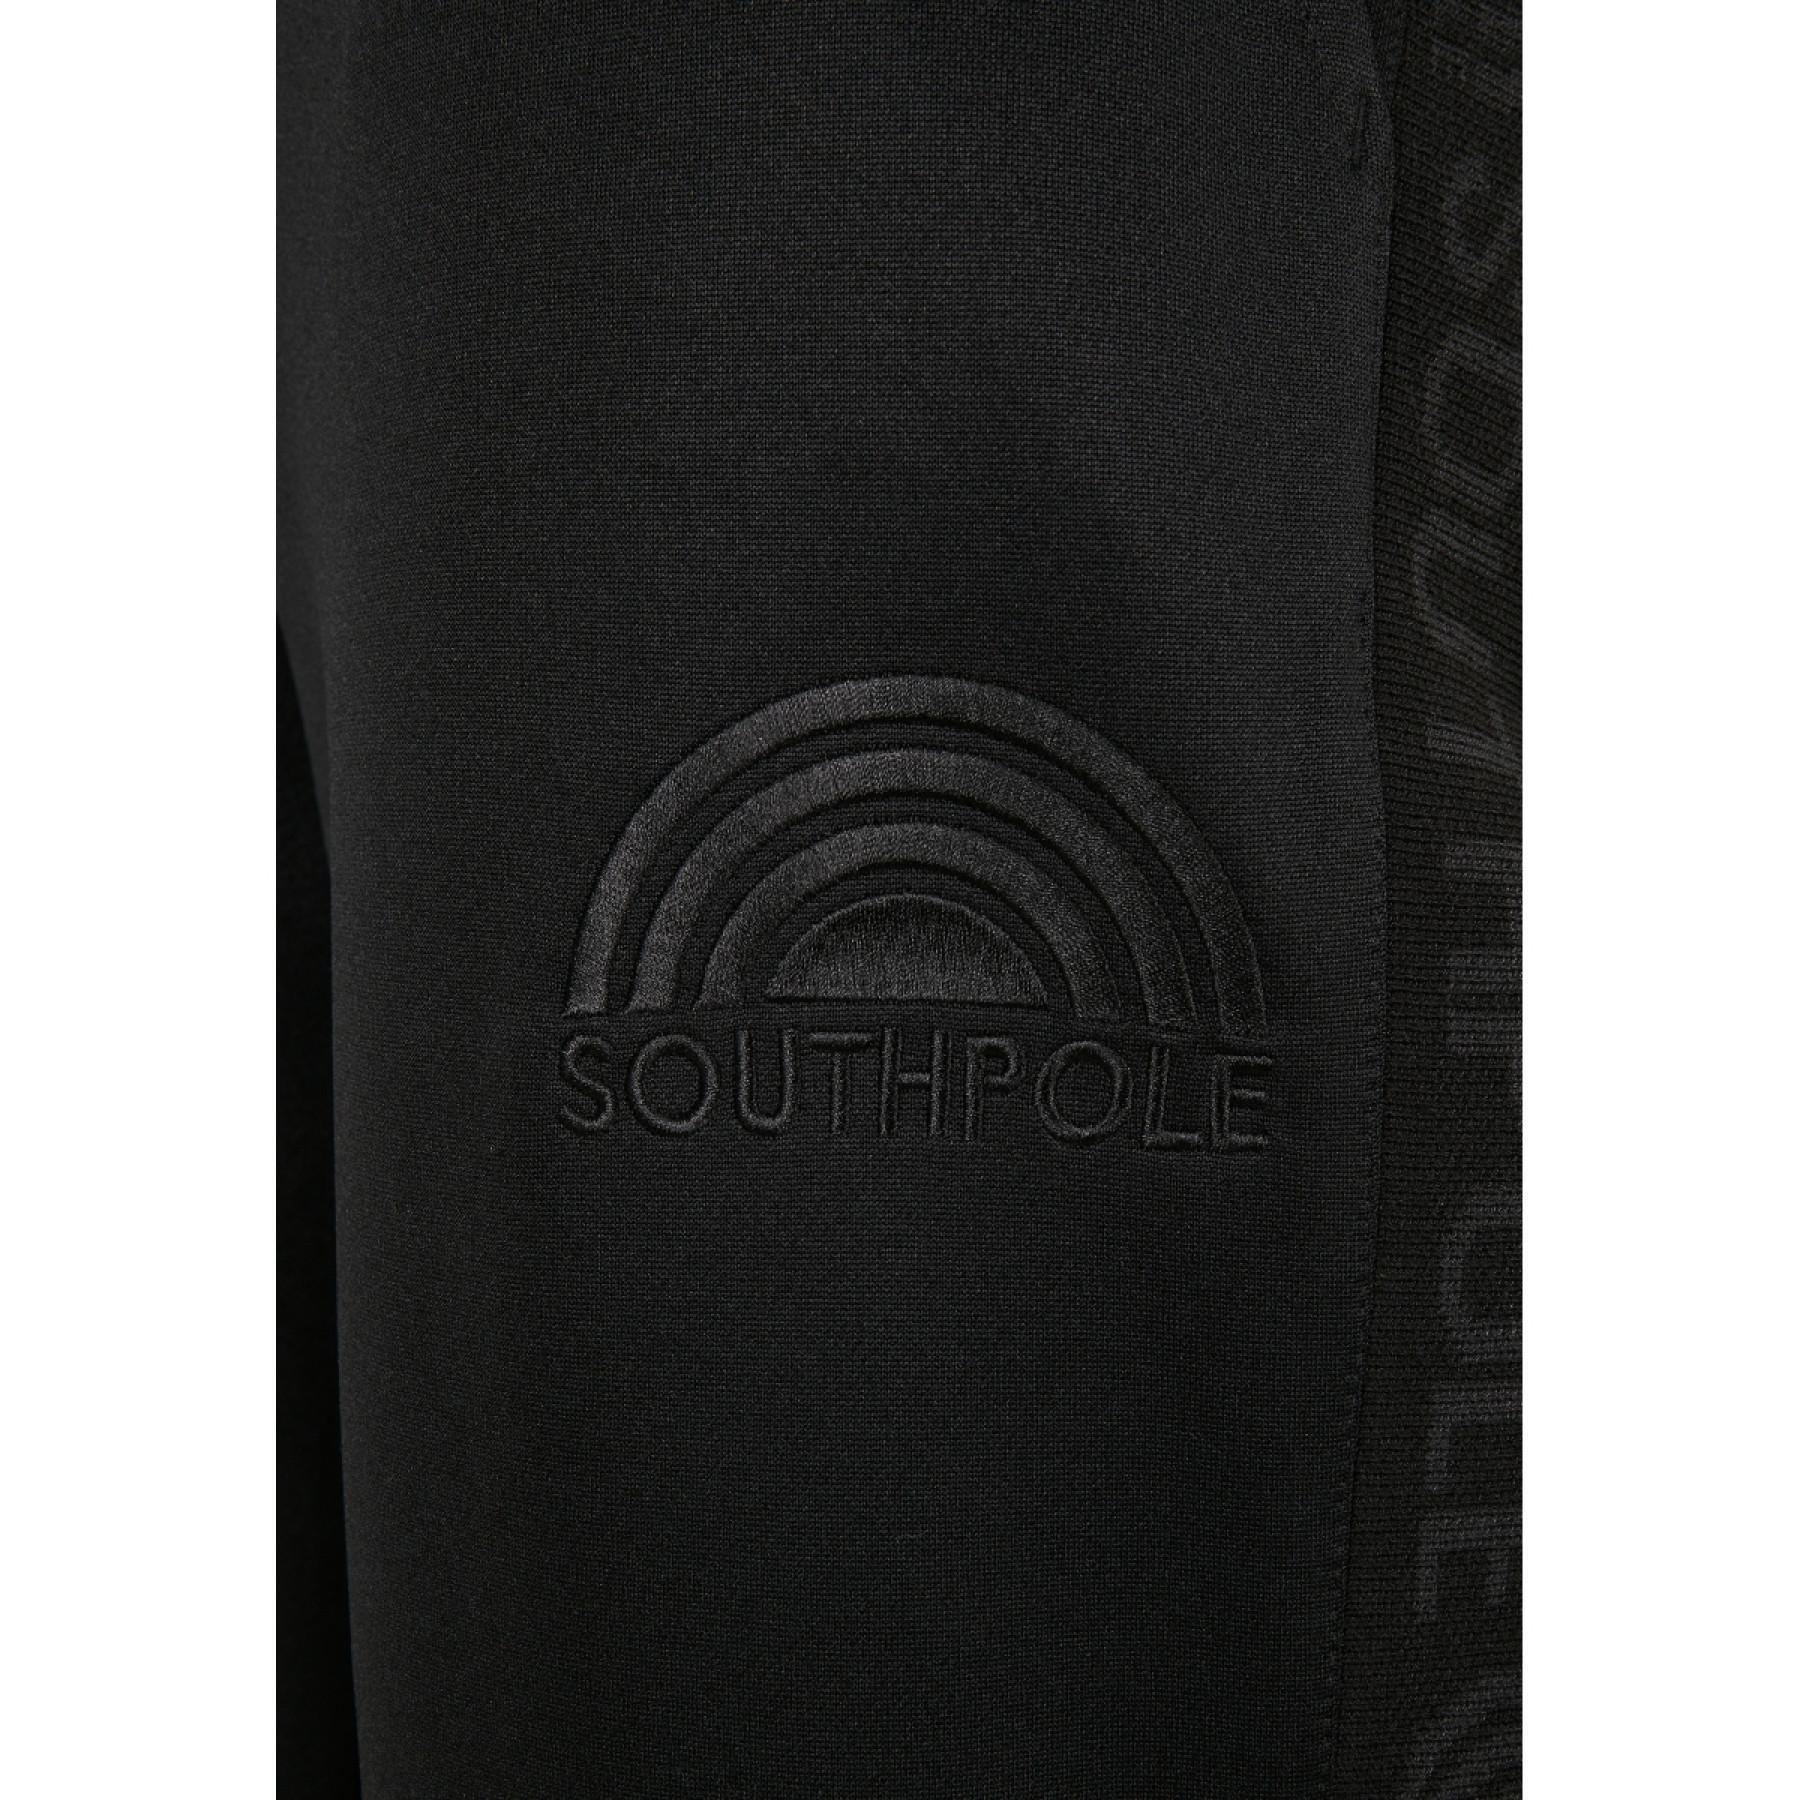 Pantalon Southpole tricot with tape